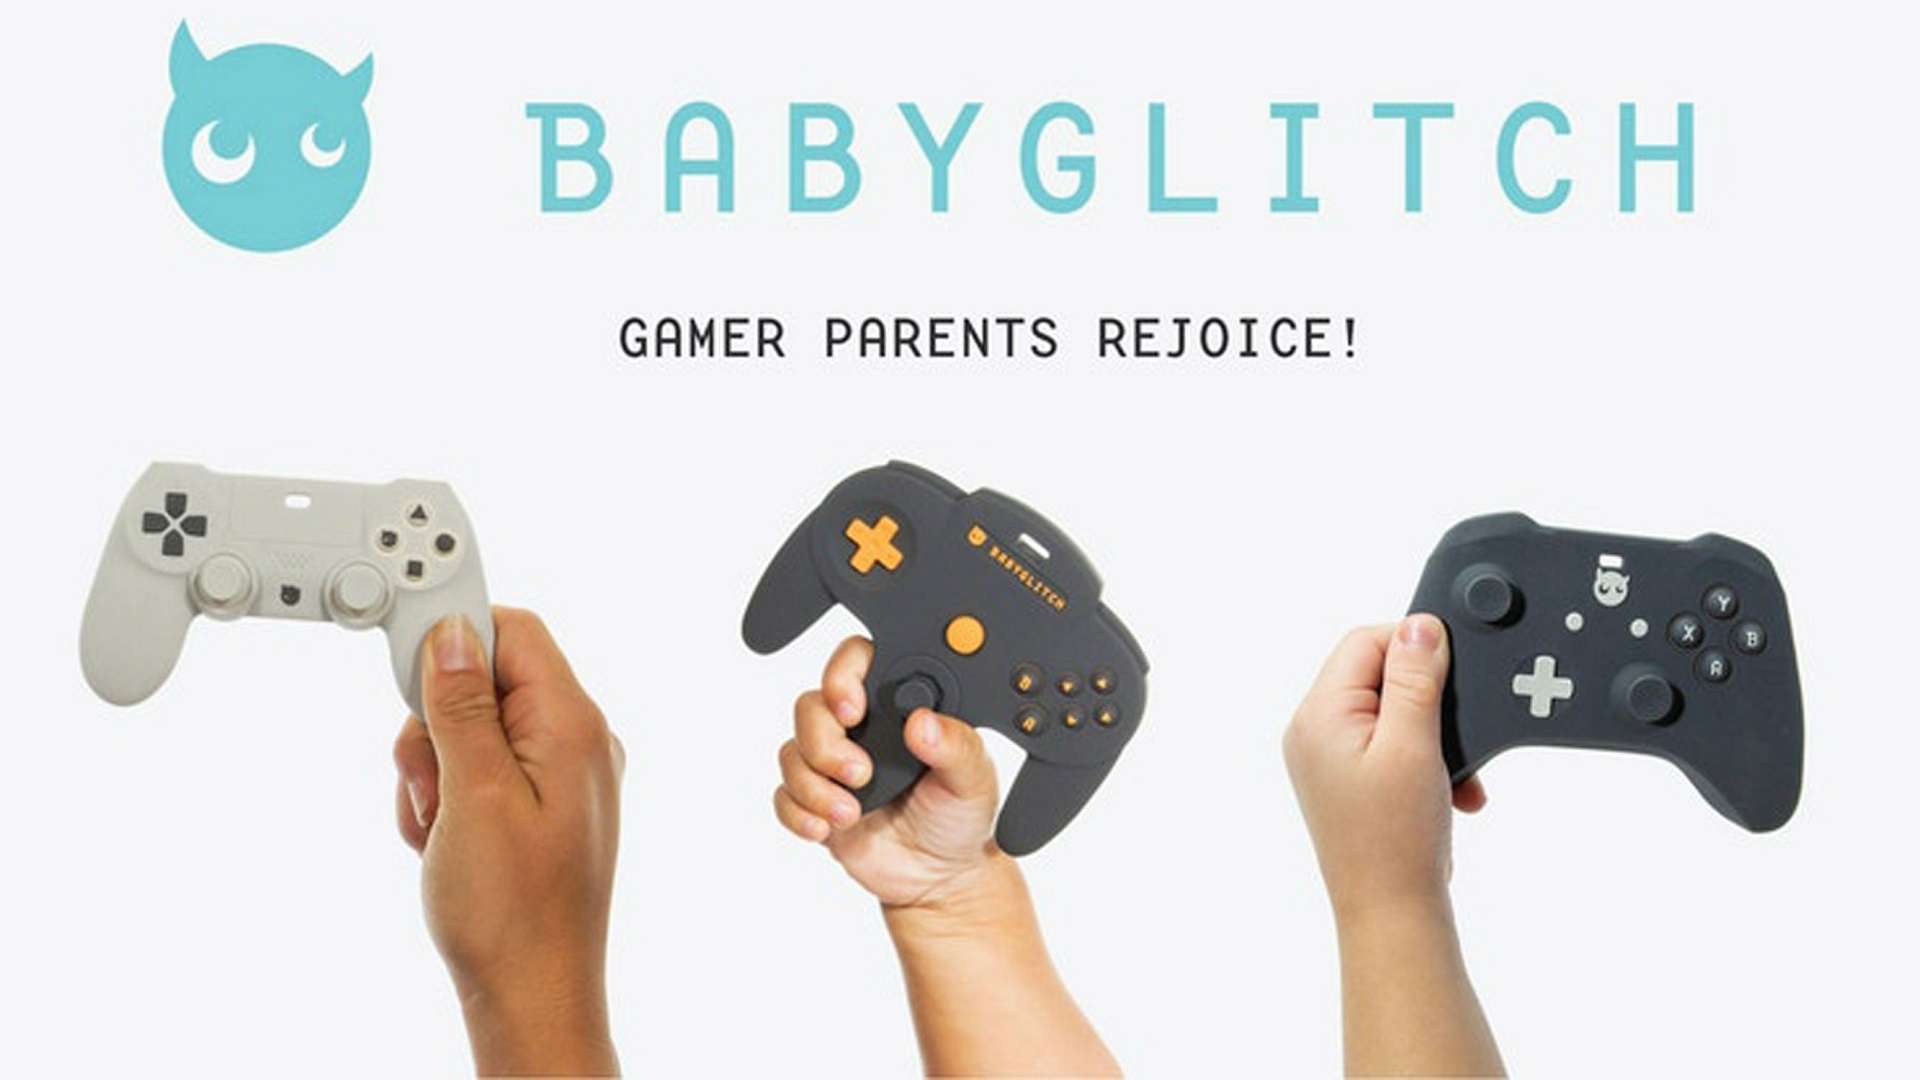 BabyGlitch controllers